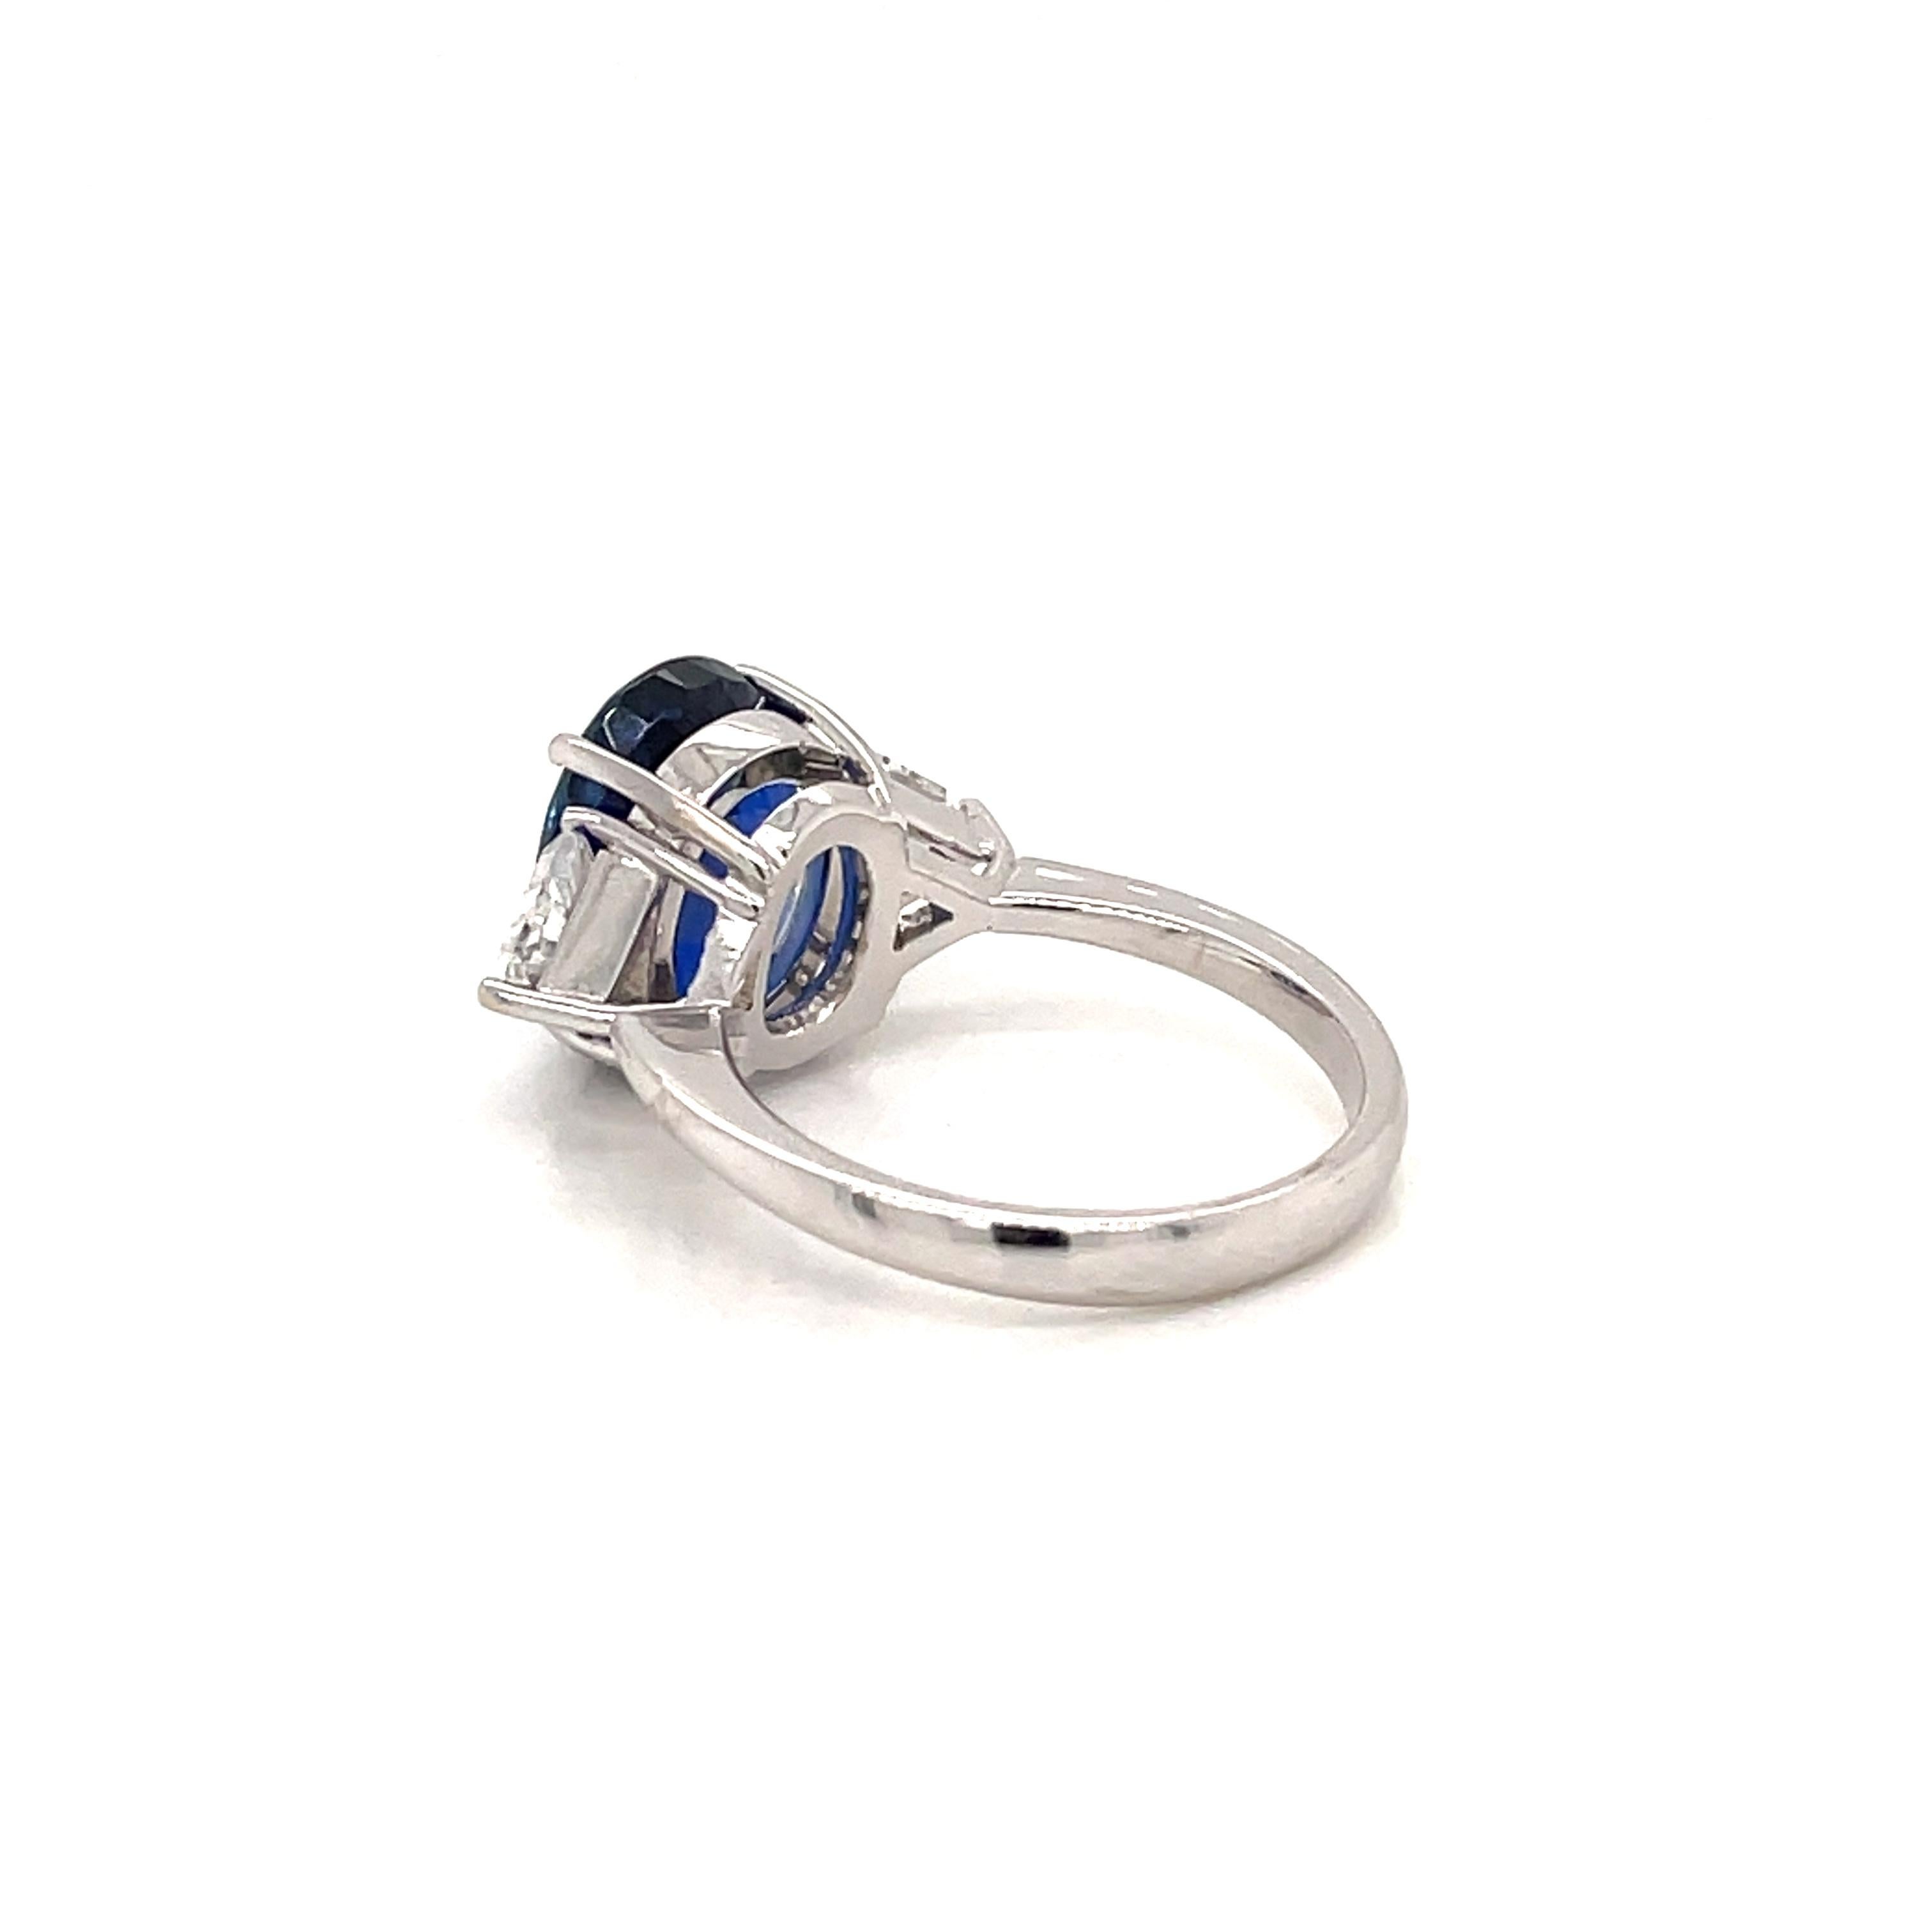 Vintage Certified 6 Carat Unheated Burma Sapphire Diamond Engagement Ring 7